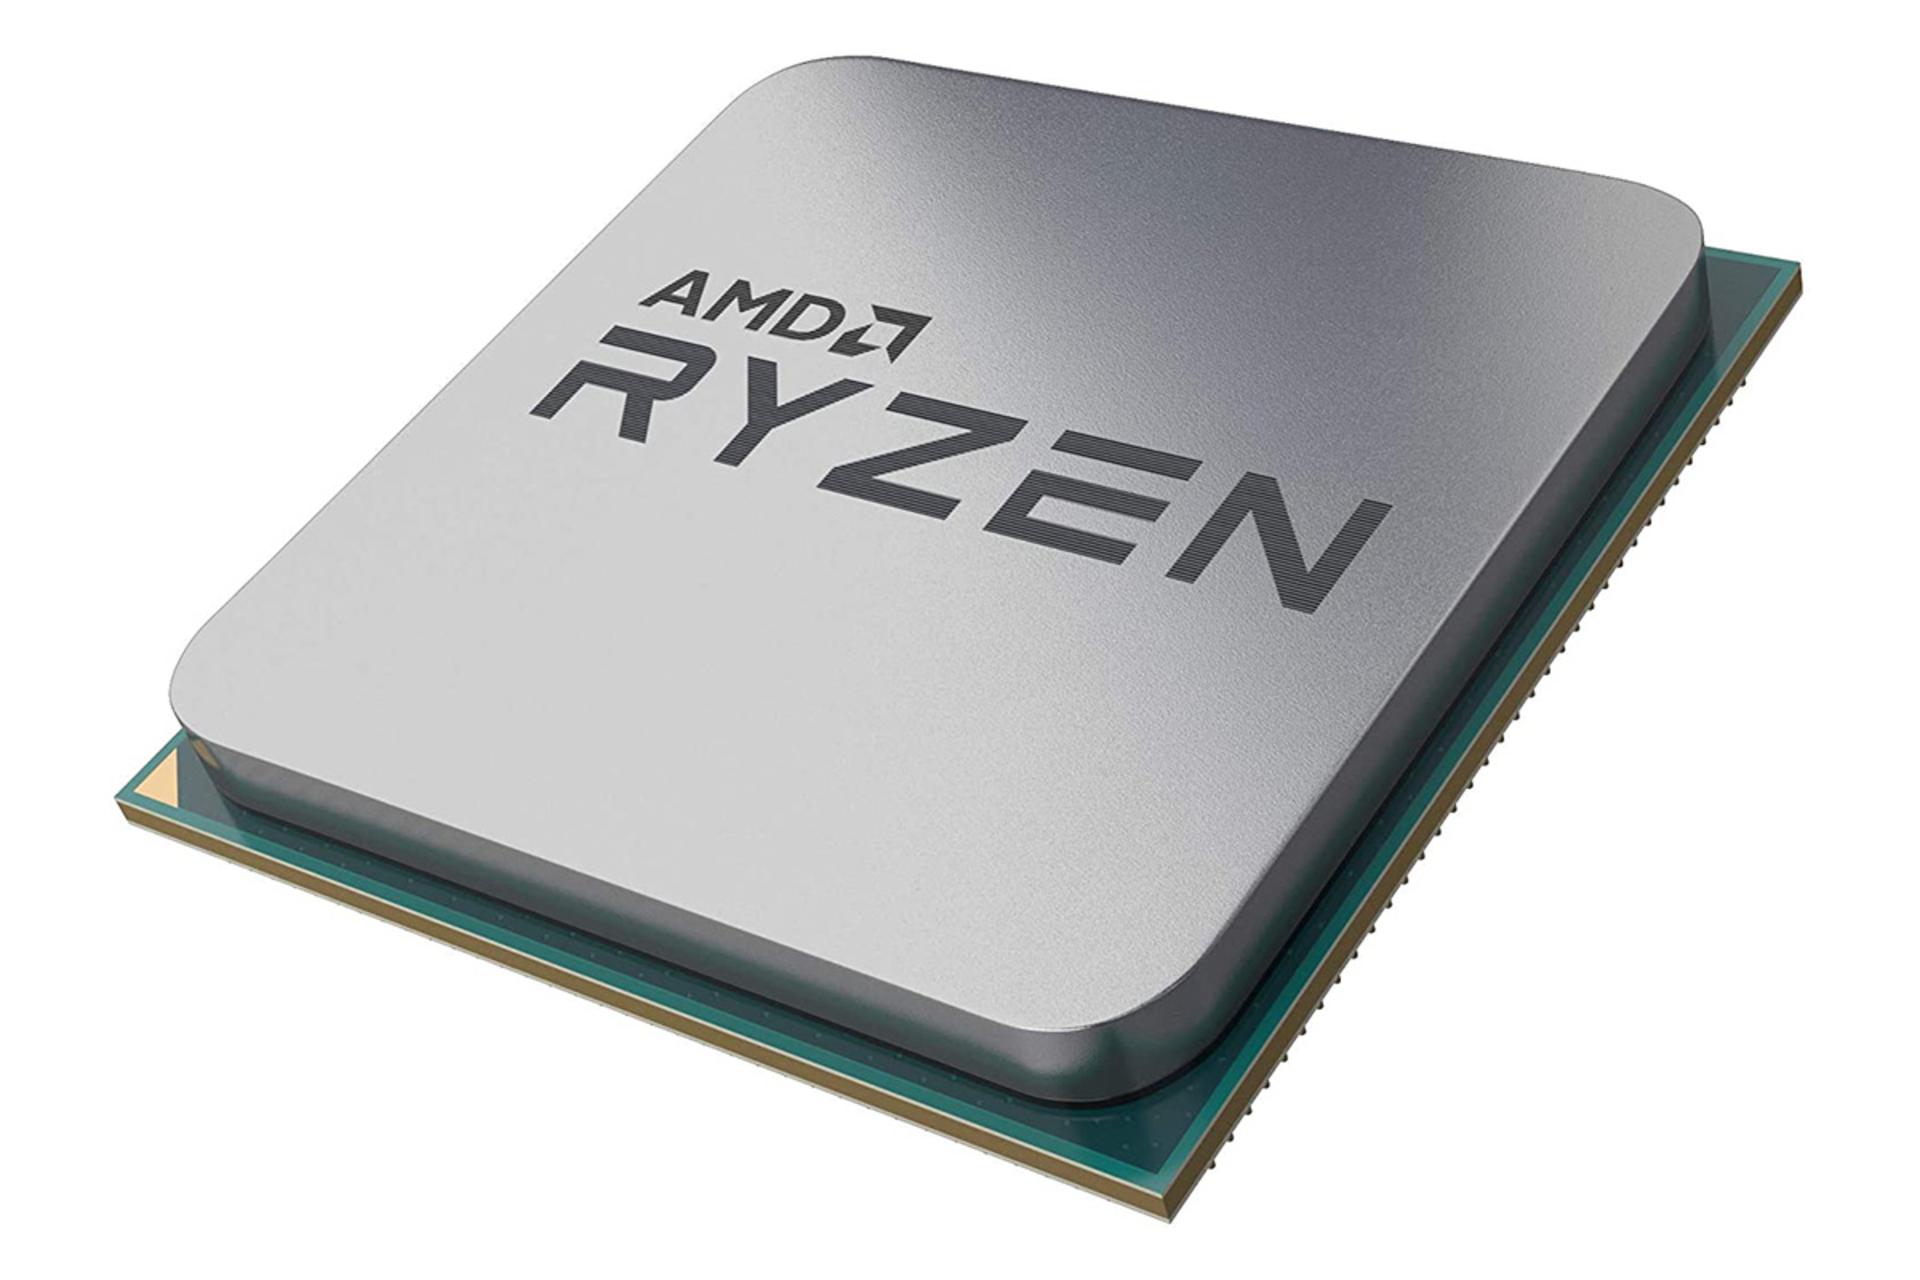 AMD Ryzen 3 3200G / رایزن 3